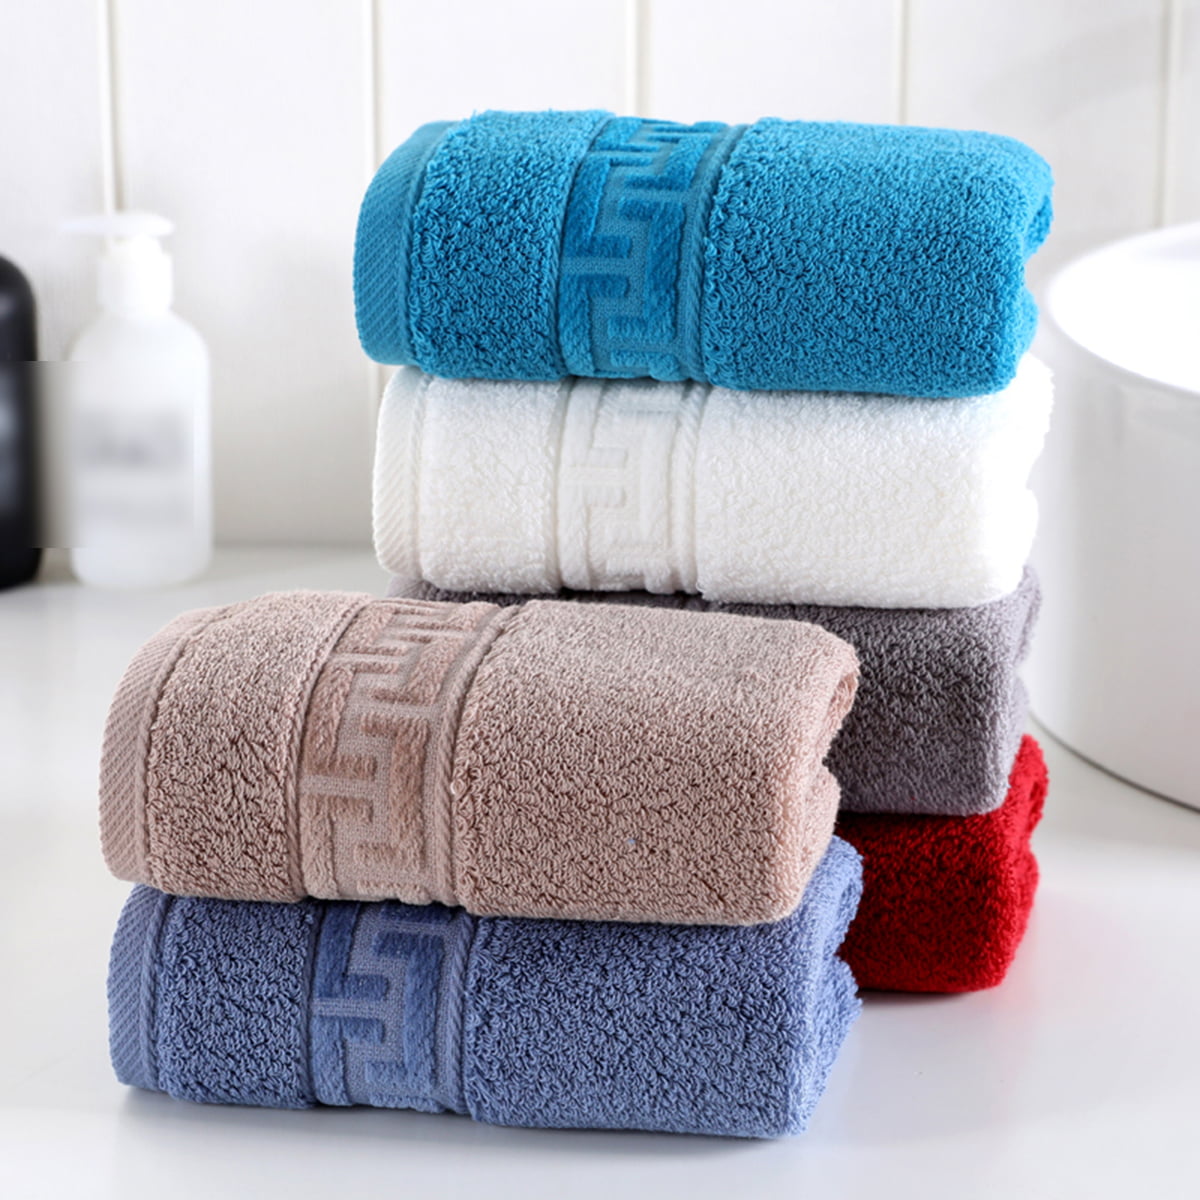 Details about   1pc 100% Cotton Bath Towel Face Care Hand Cloth Soft Towel Bathroom for Adults # 